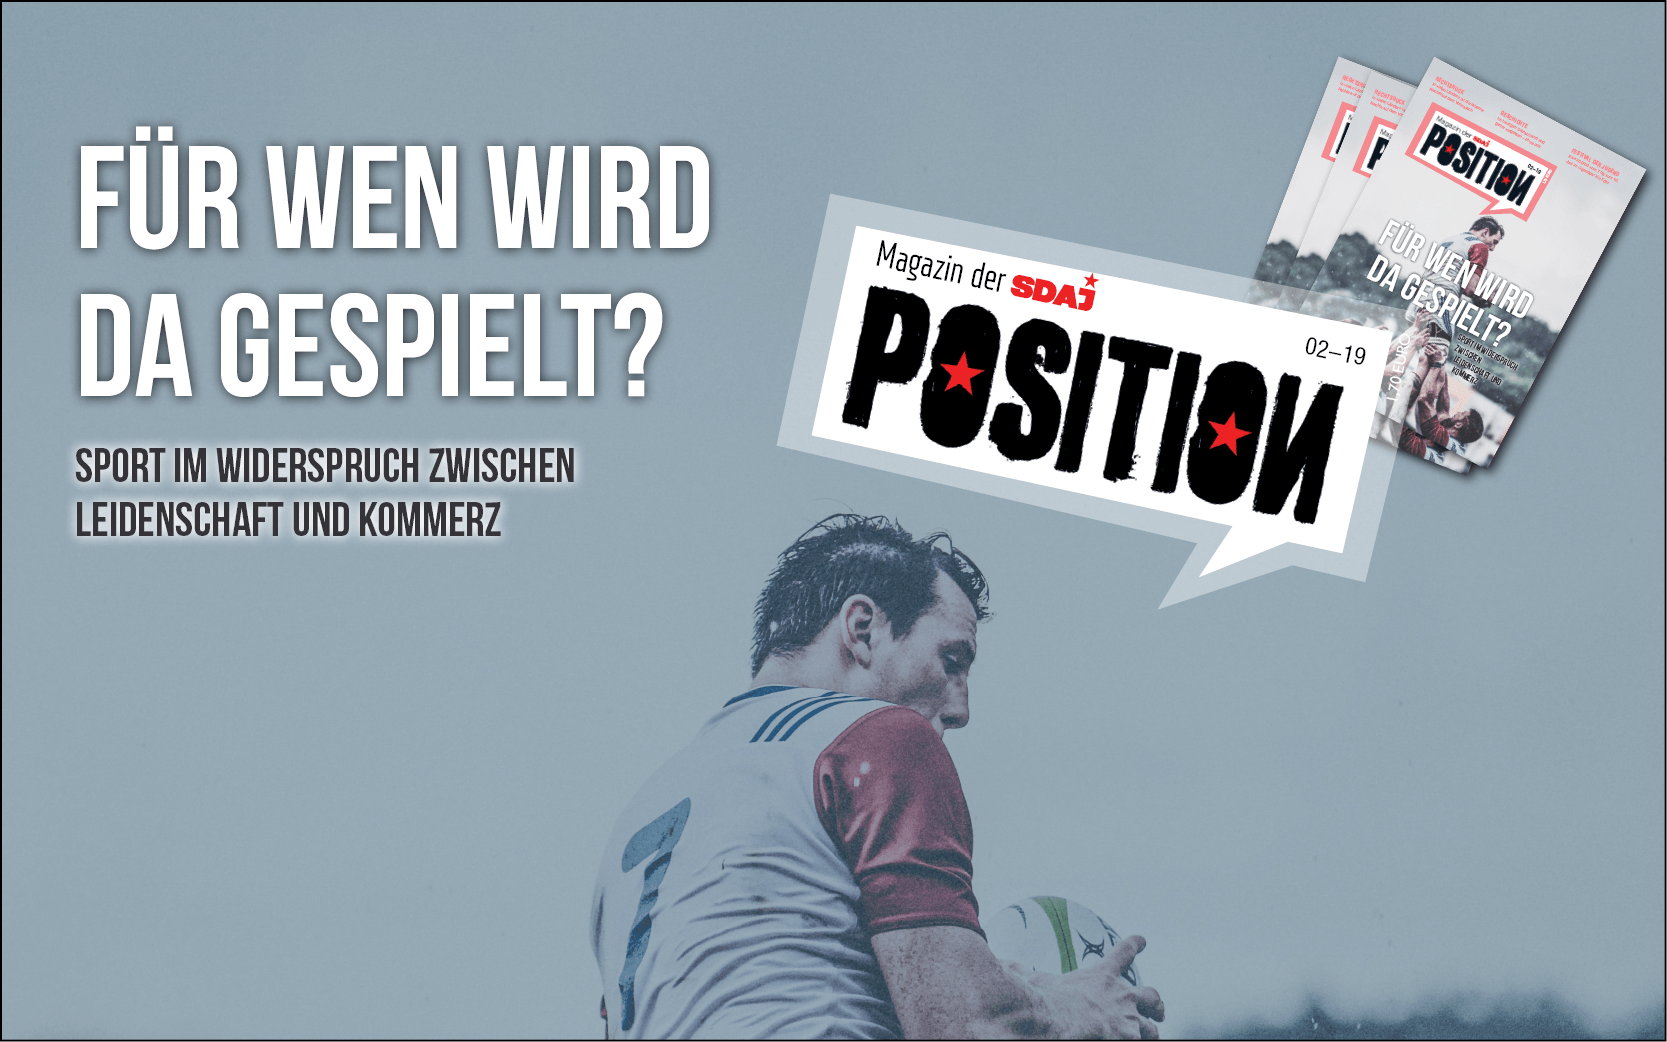 blog.uz .Position0219 - Neue “Position”: Sport - - Blog